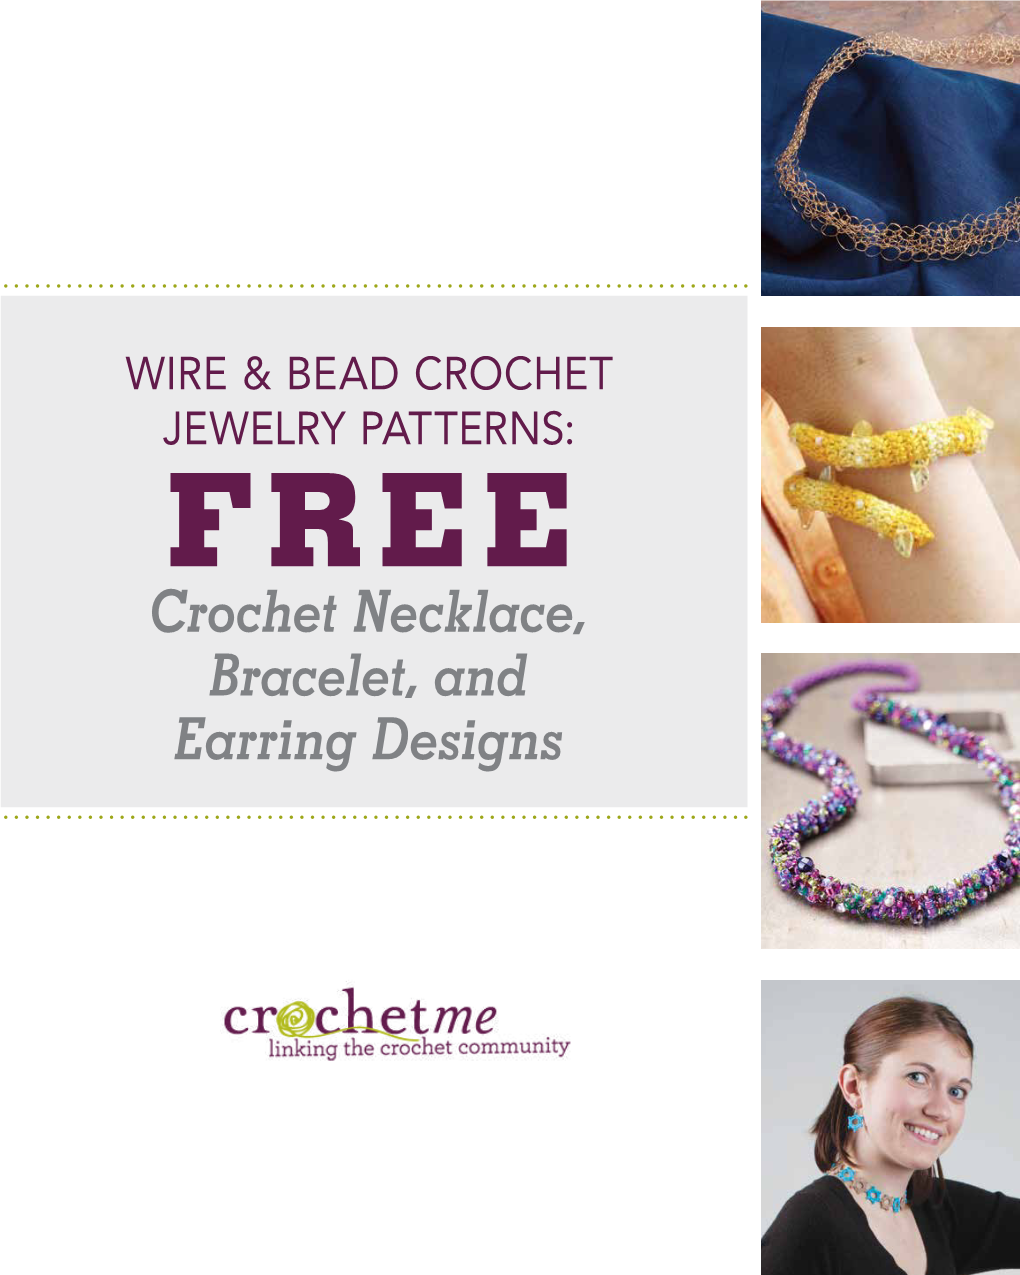 Wire & Bead Crochet Jewelry Patterns